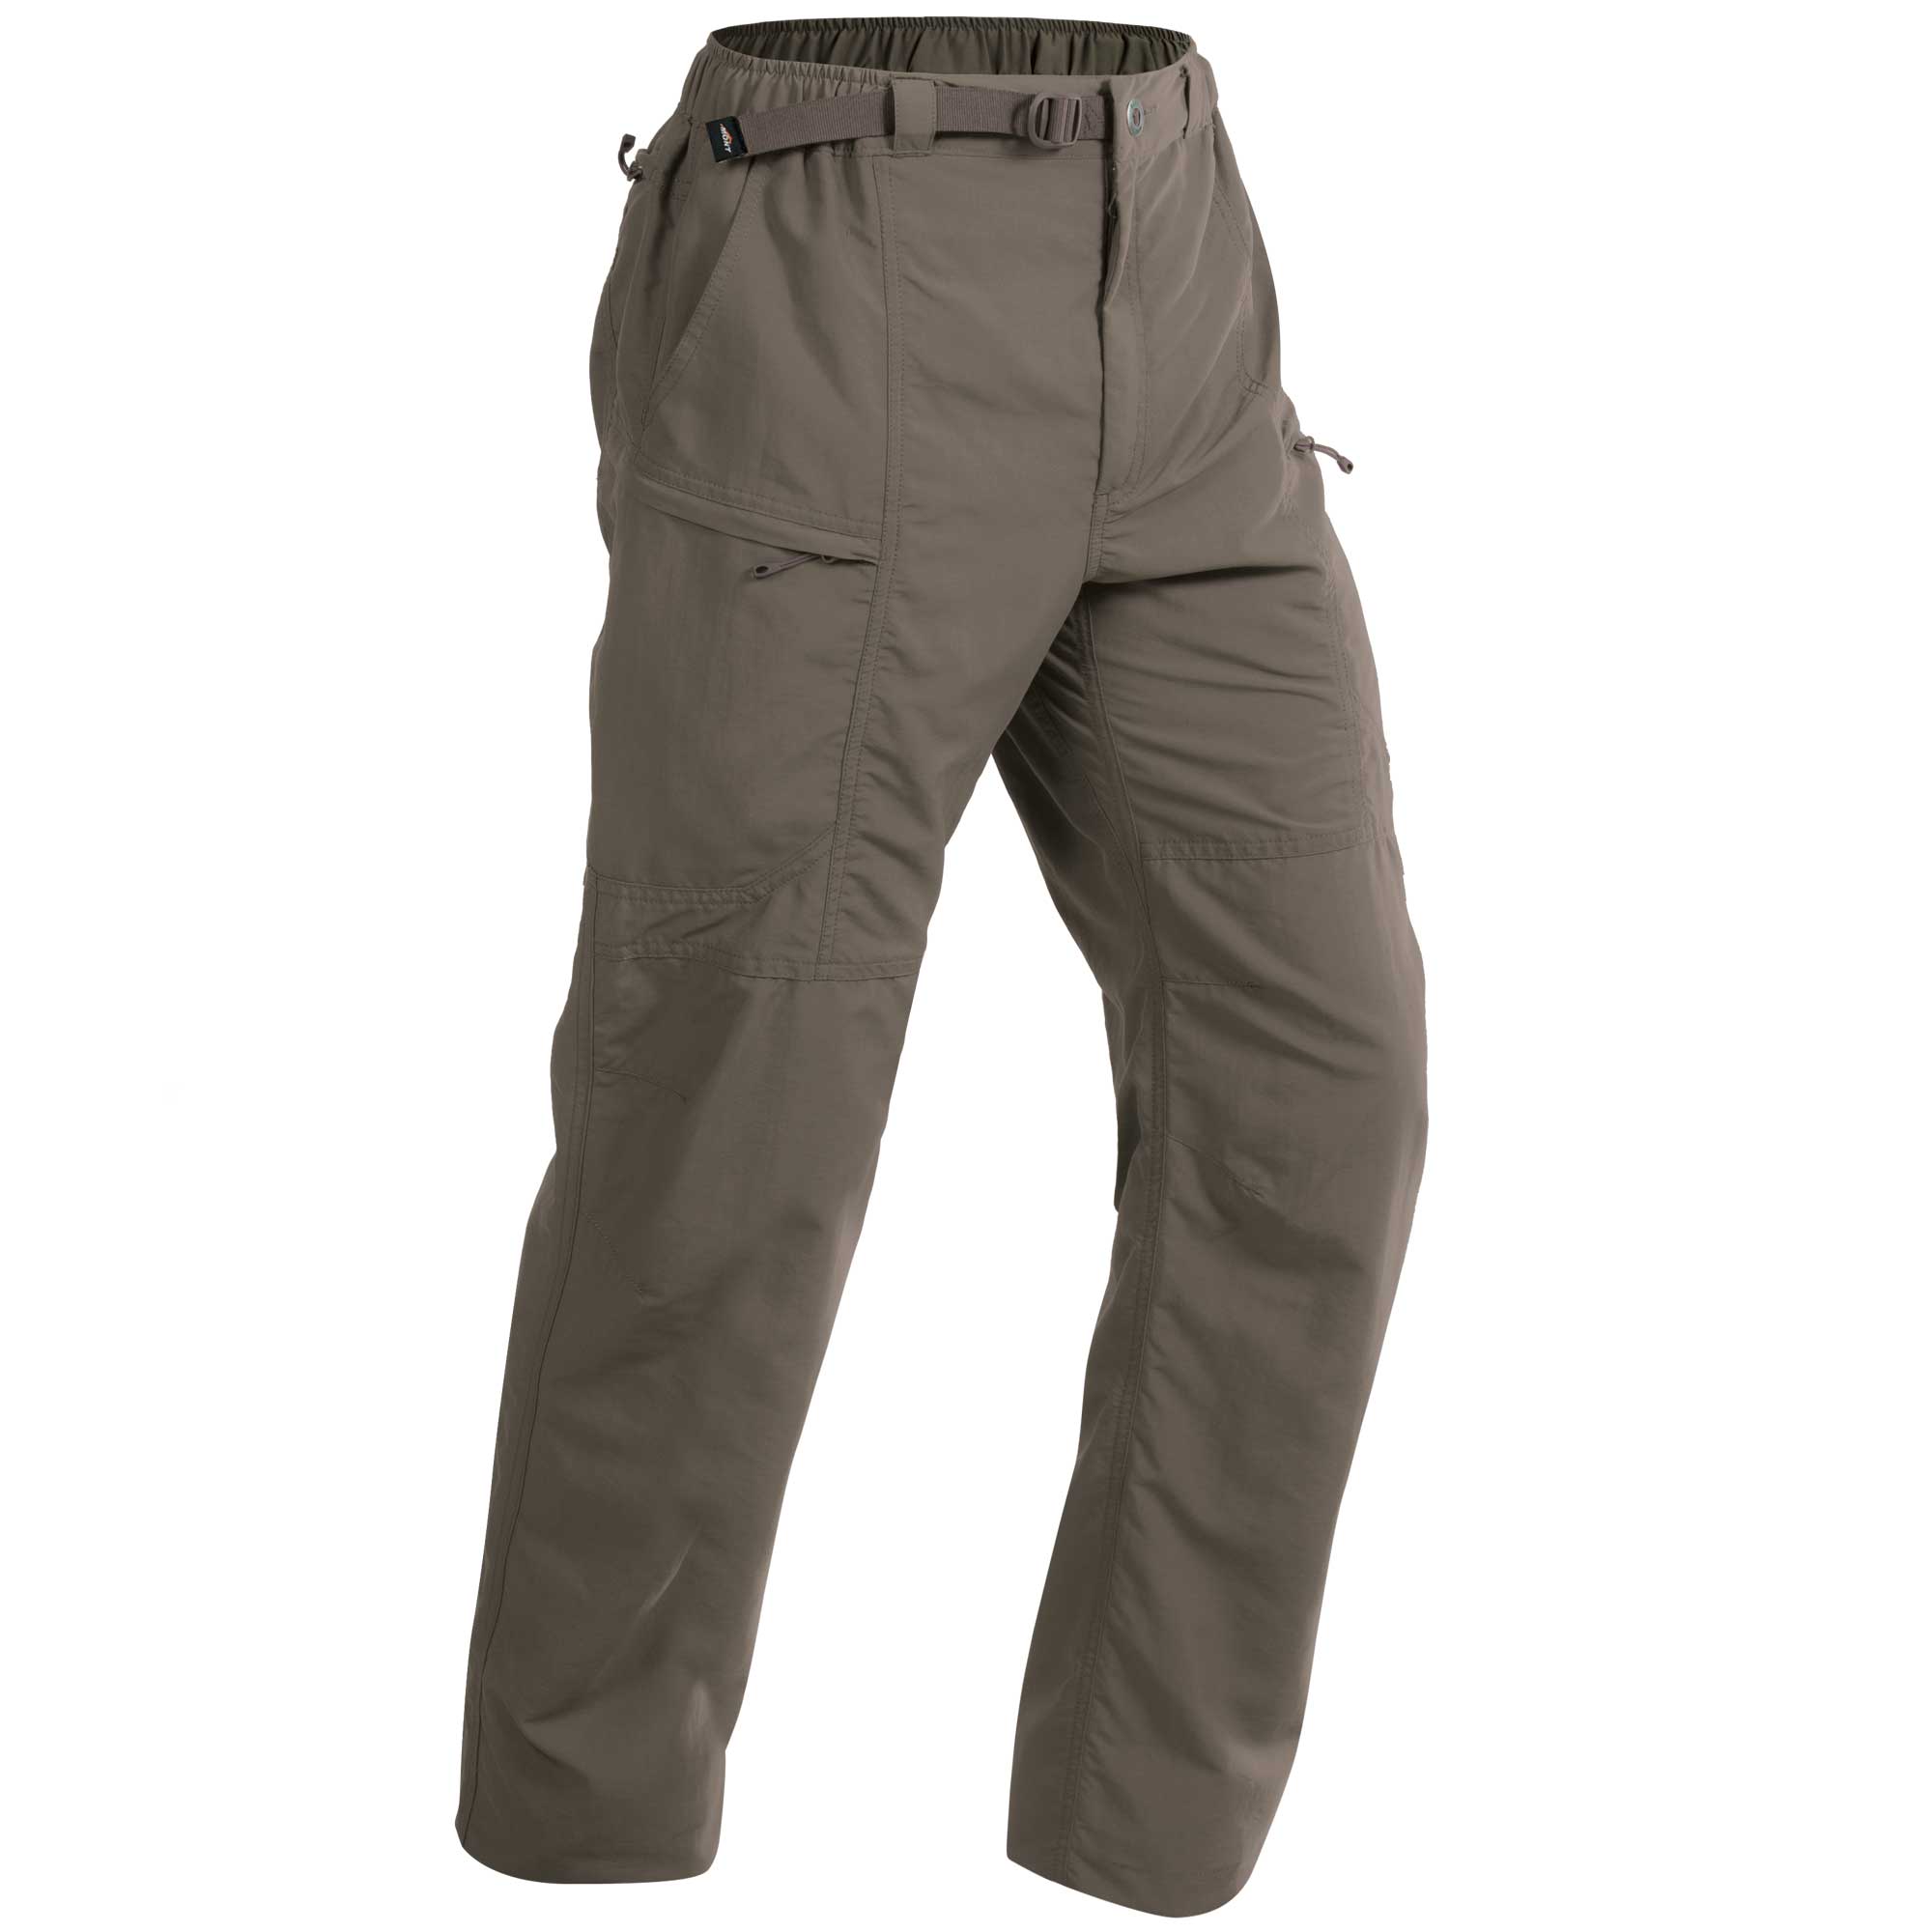 5.11® Ridge Pant: Comfort & Functionality Combined | 5.11 Tactical®